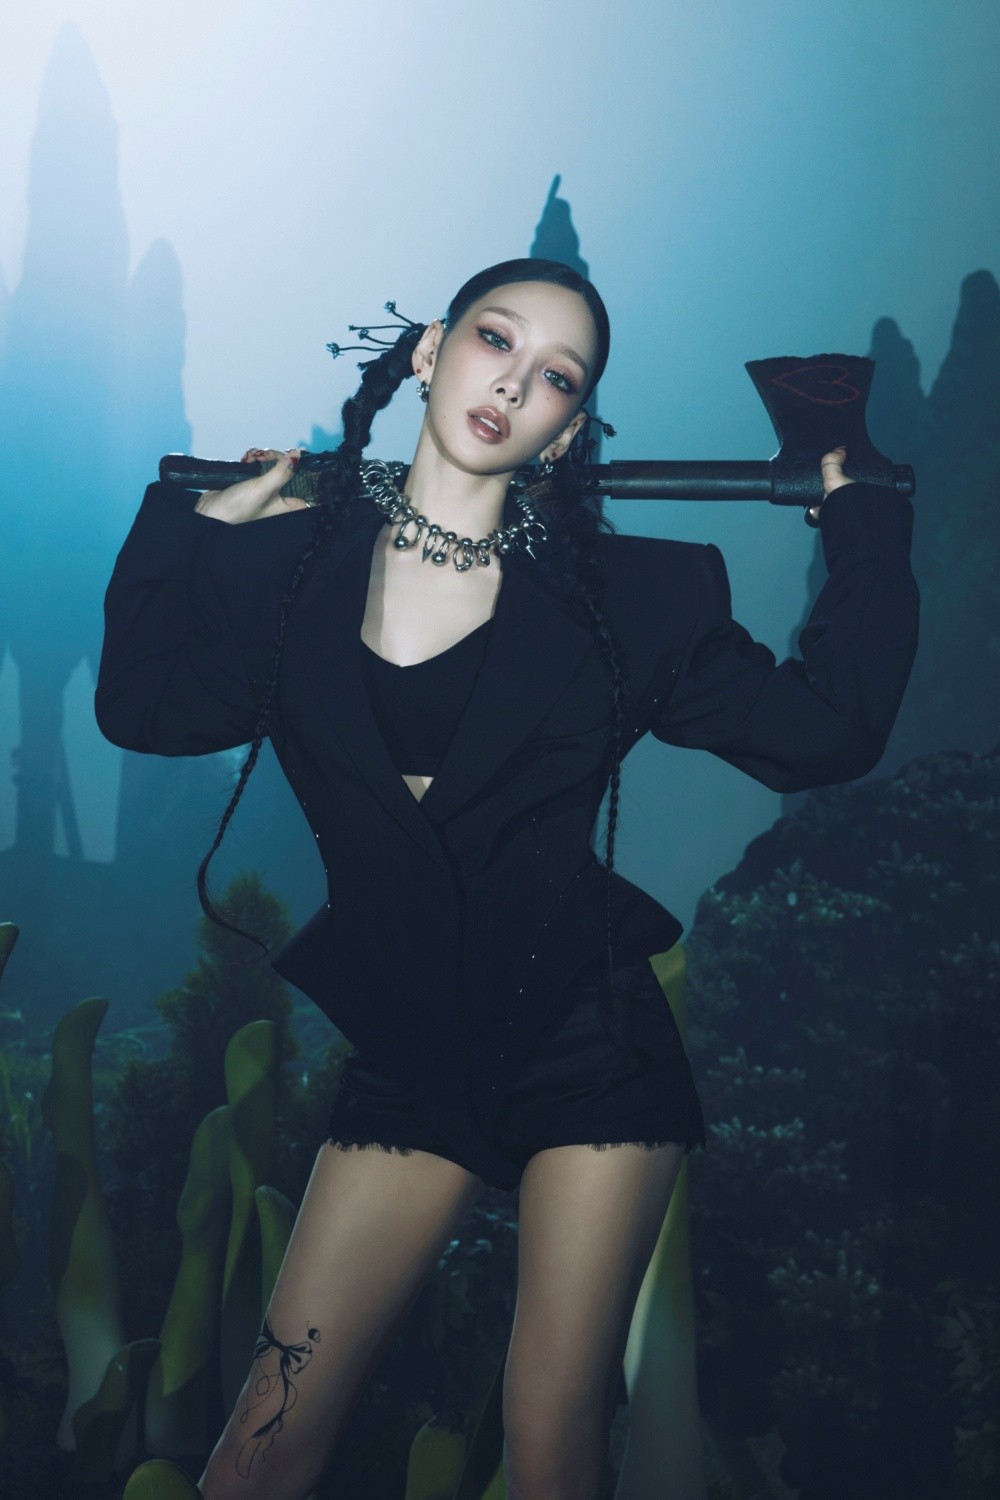 Taeyeon, Unpredictable Charm… “Fantasy Horror, Intense”